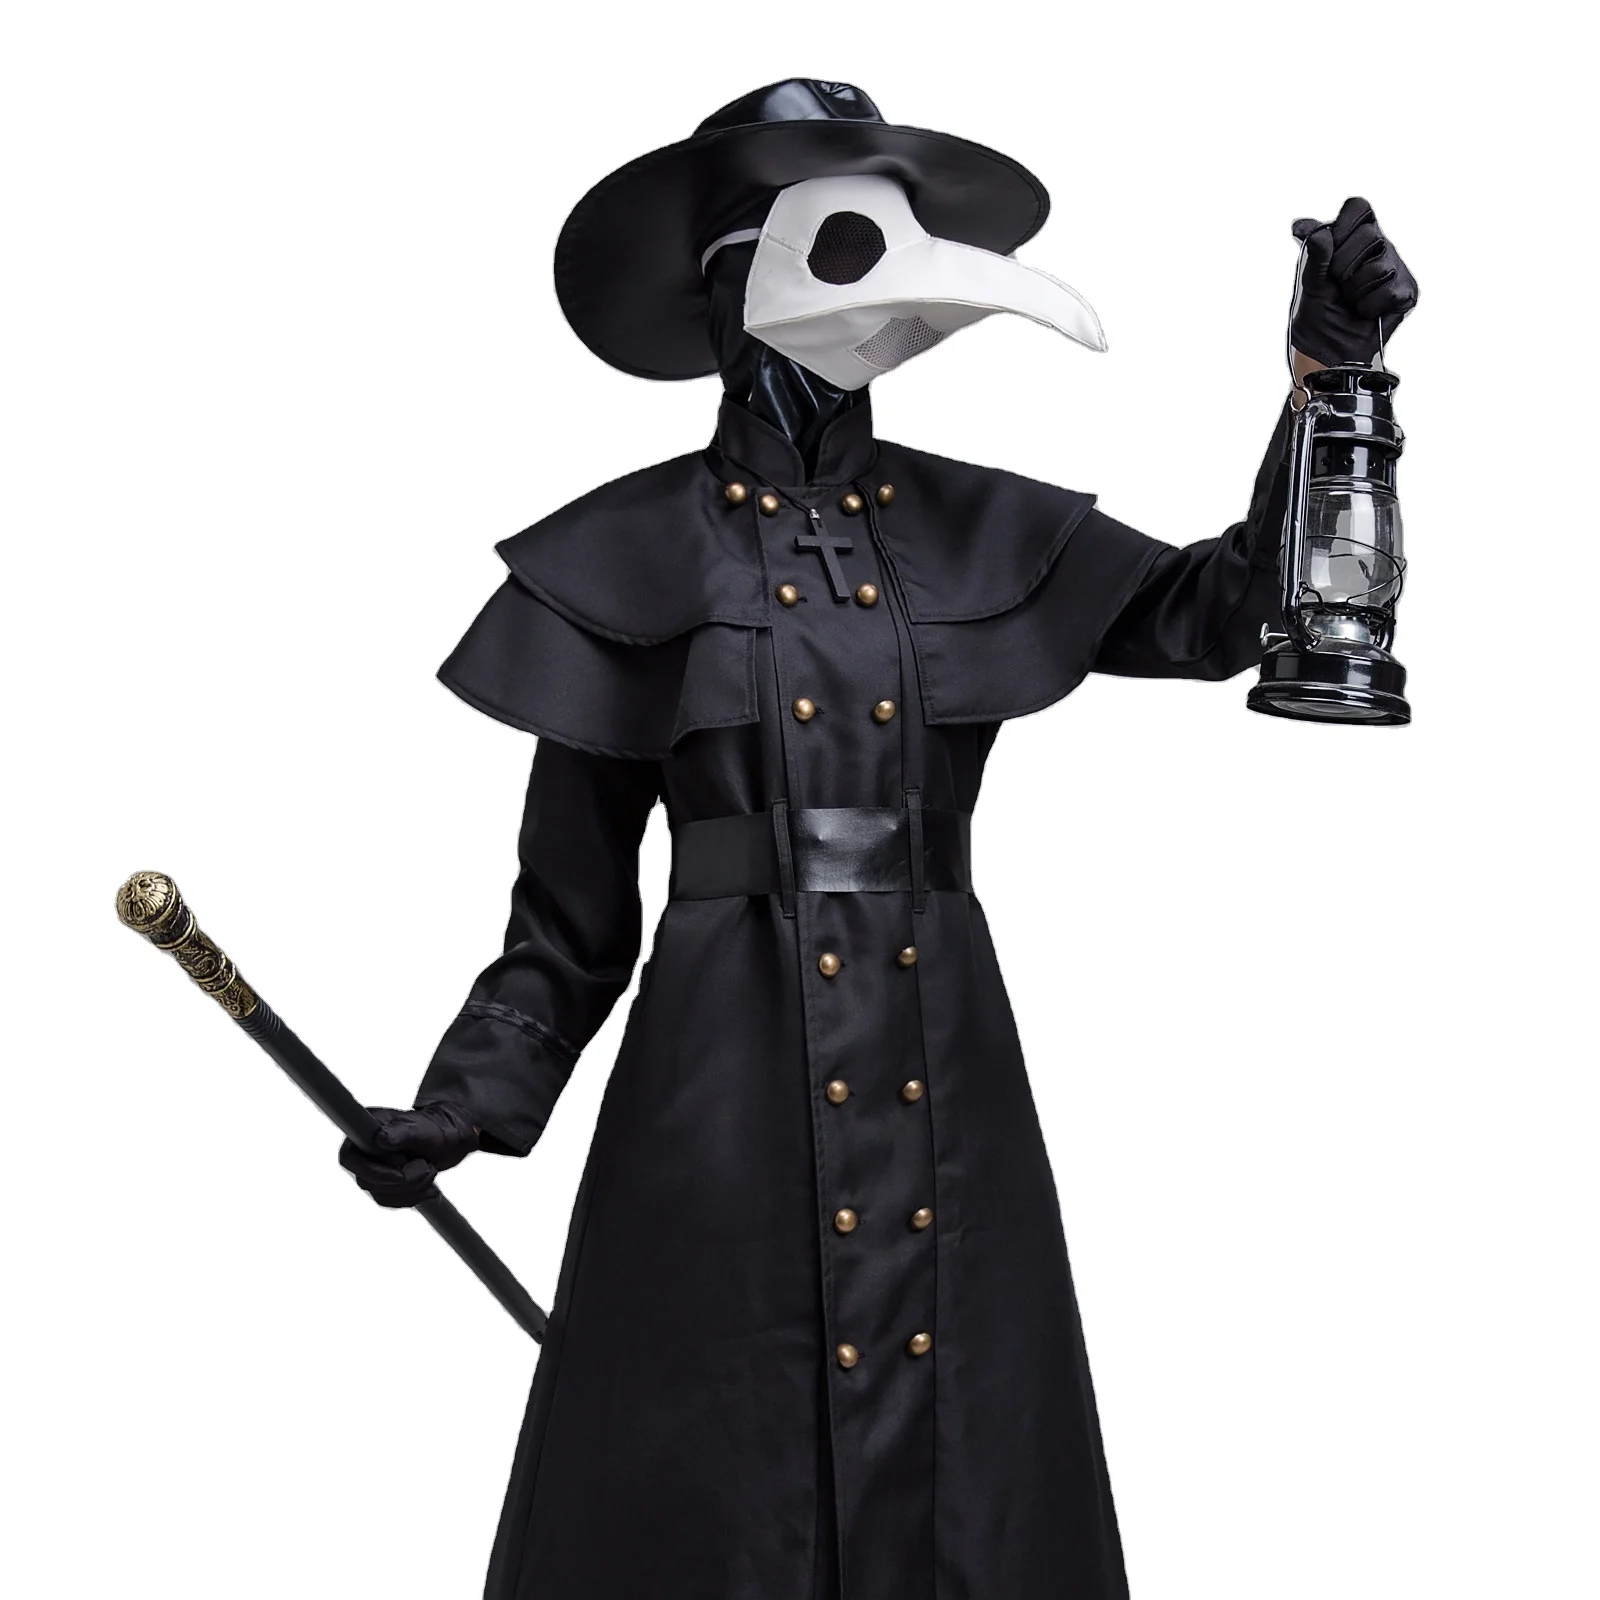 

Halloween costume adult medieval steampunk style plague doctor costume crow beak bird costume, Black +white